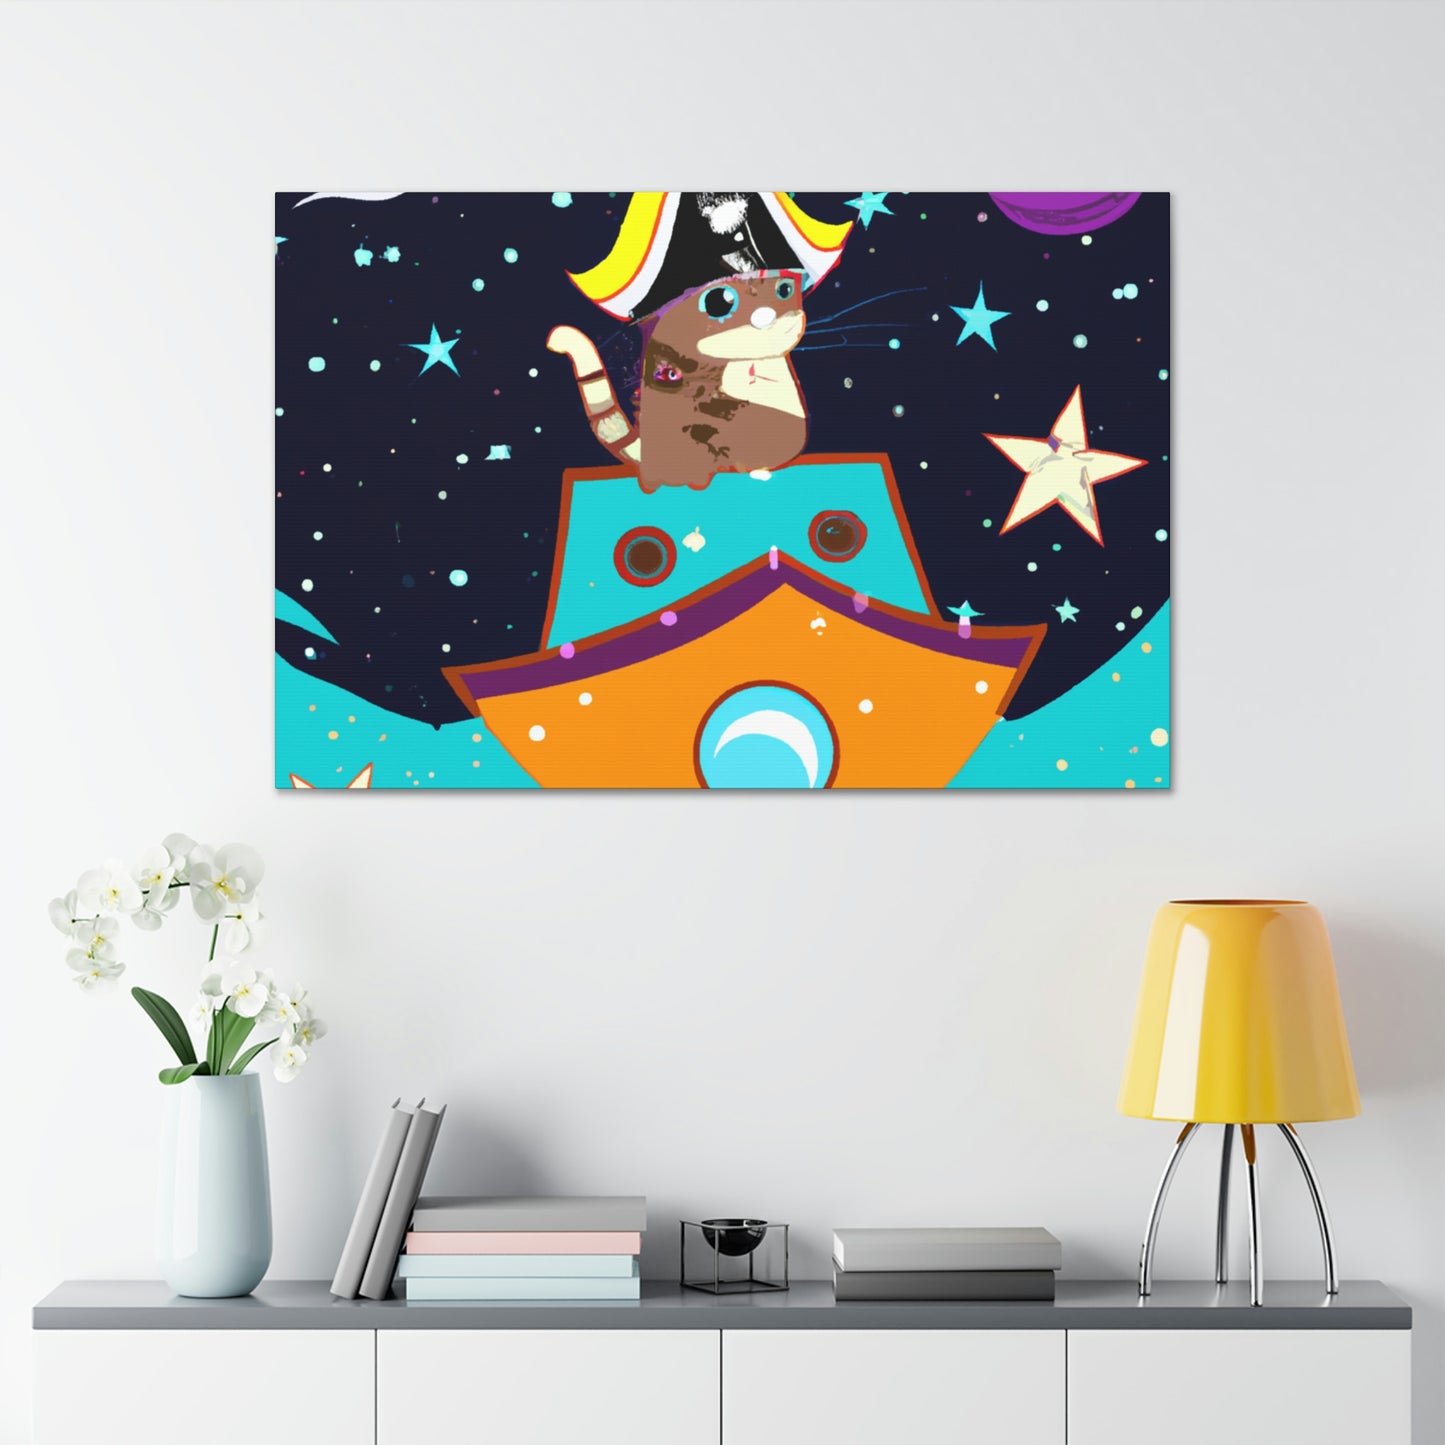 The Intergalactic Feline Pirate - The Alien Canva